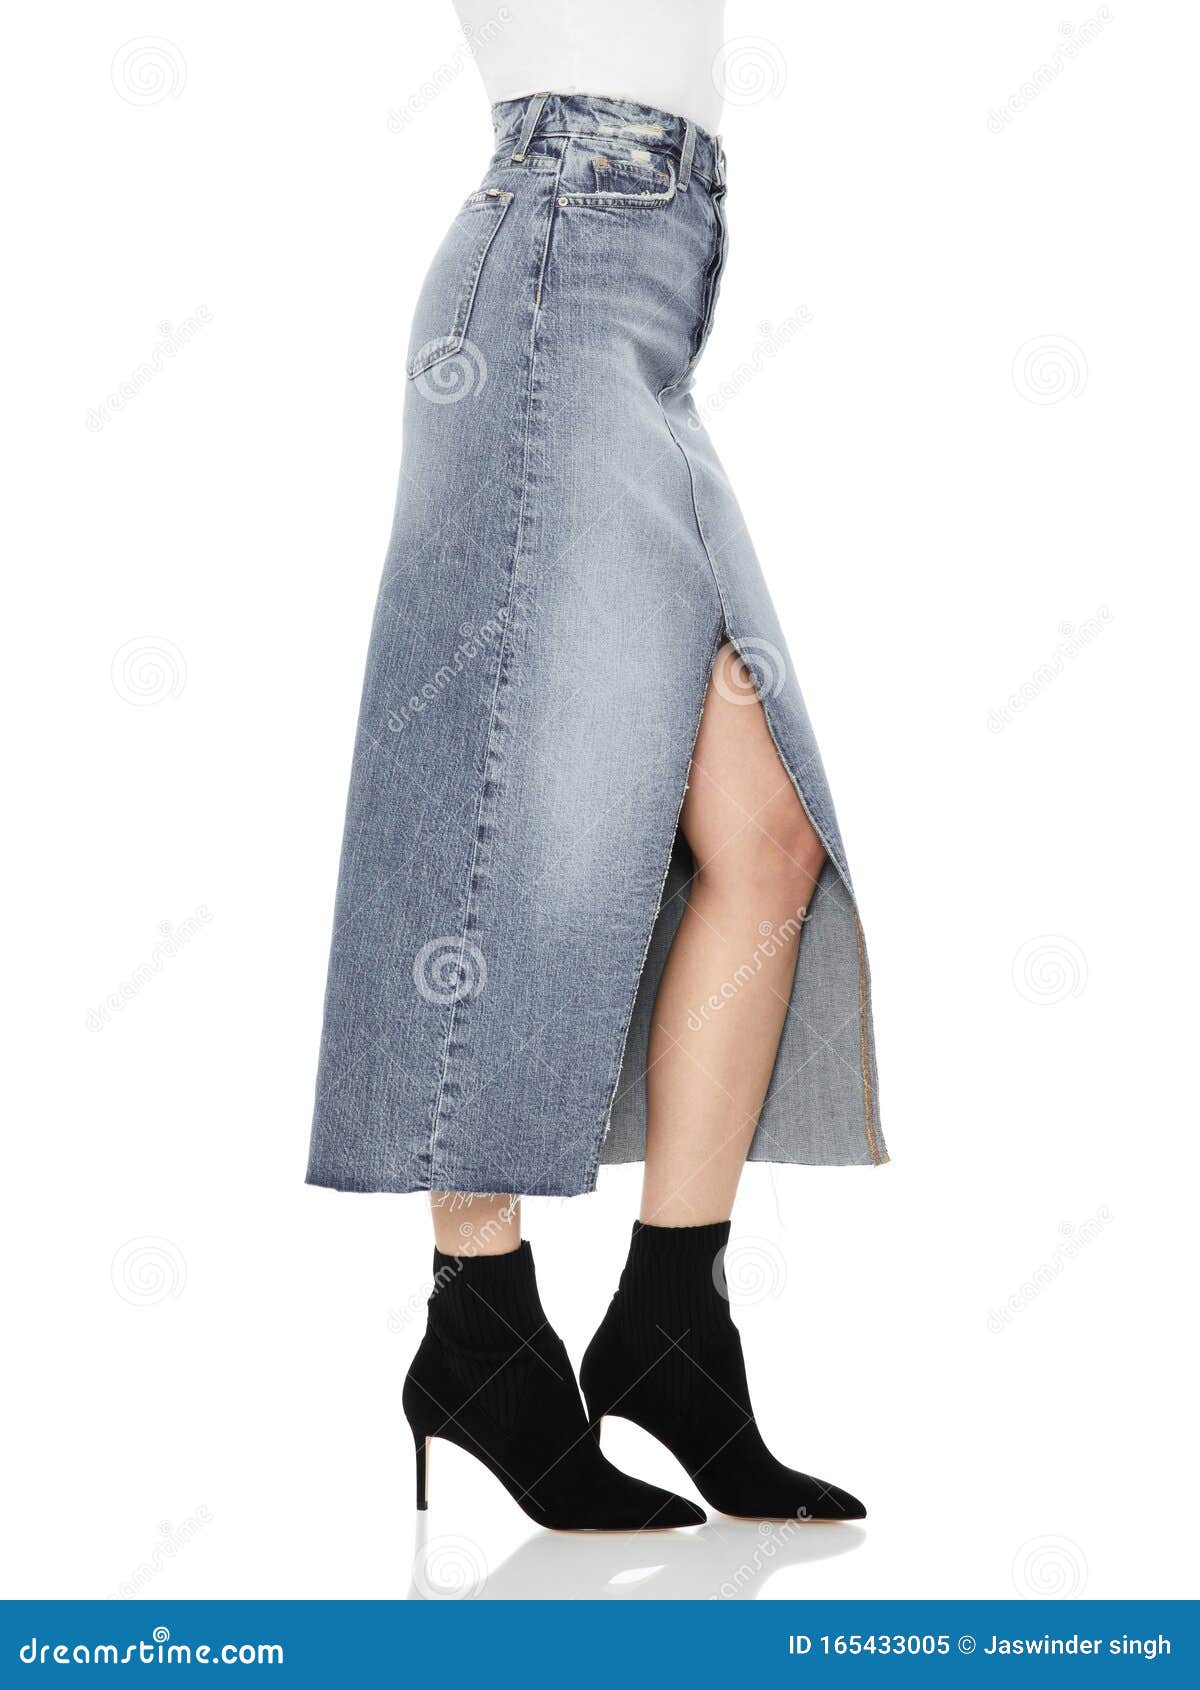 Wholesale Skinny Jean Skirt Women High Quality Knee-Length Denim Skirts -  China Girls Denim Skirt and Wholesale Skinny Jean Skirt Women price |  Made-in-China.com